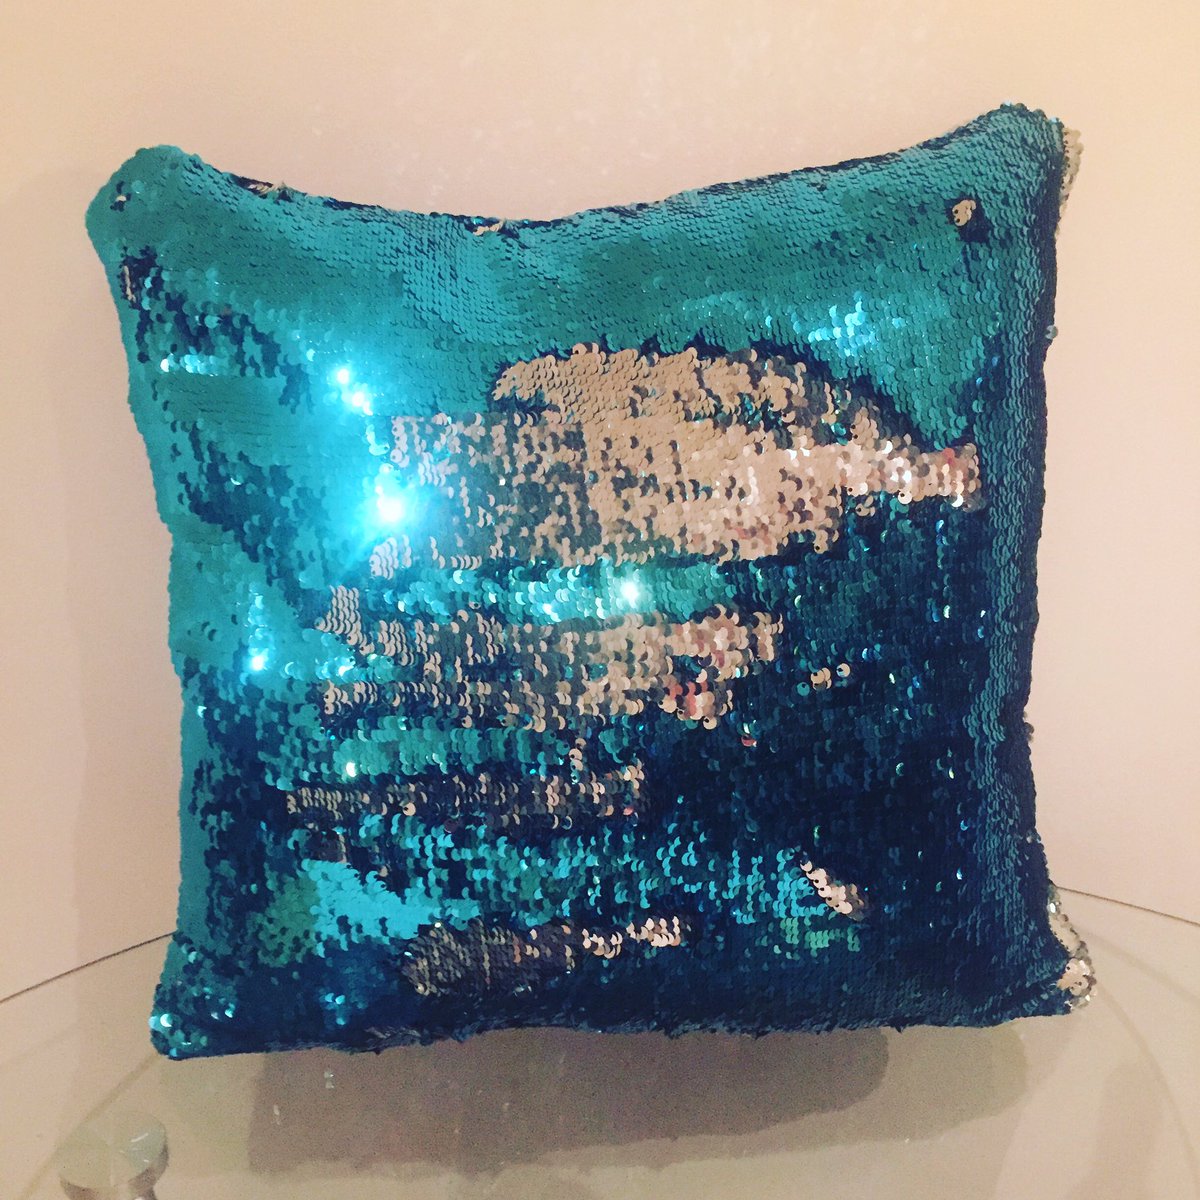 Blue and silver #mermaid cushion now in stock. Link in bio #etsy #mermaidcushion #edinburgh